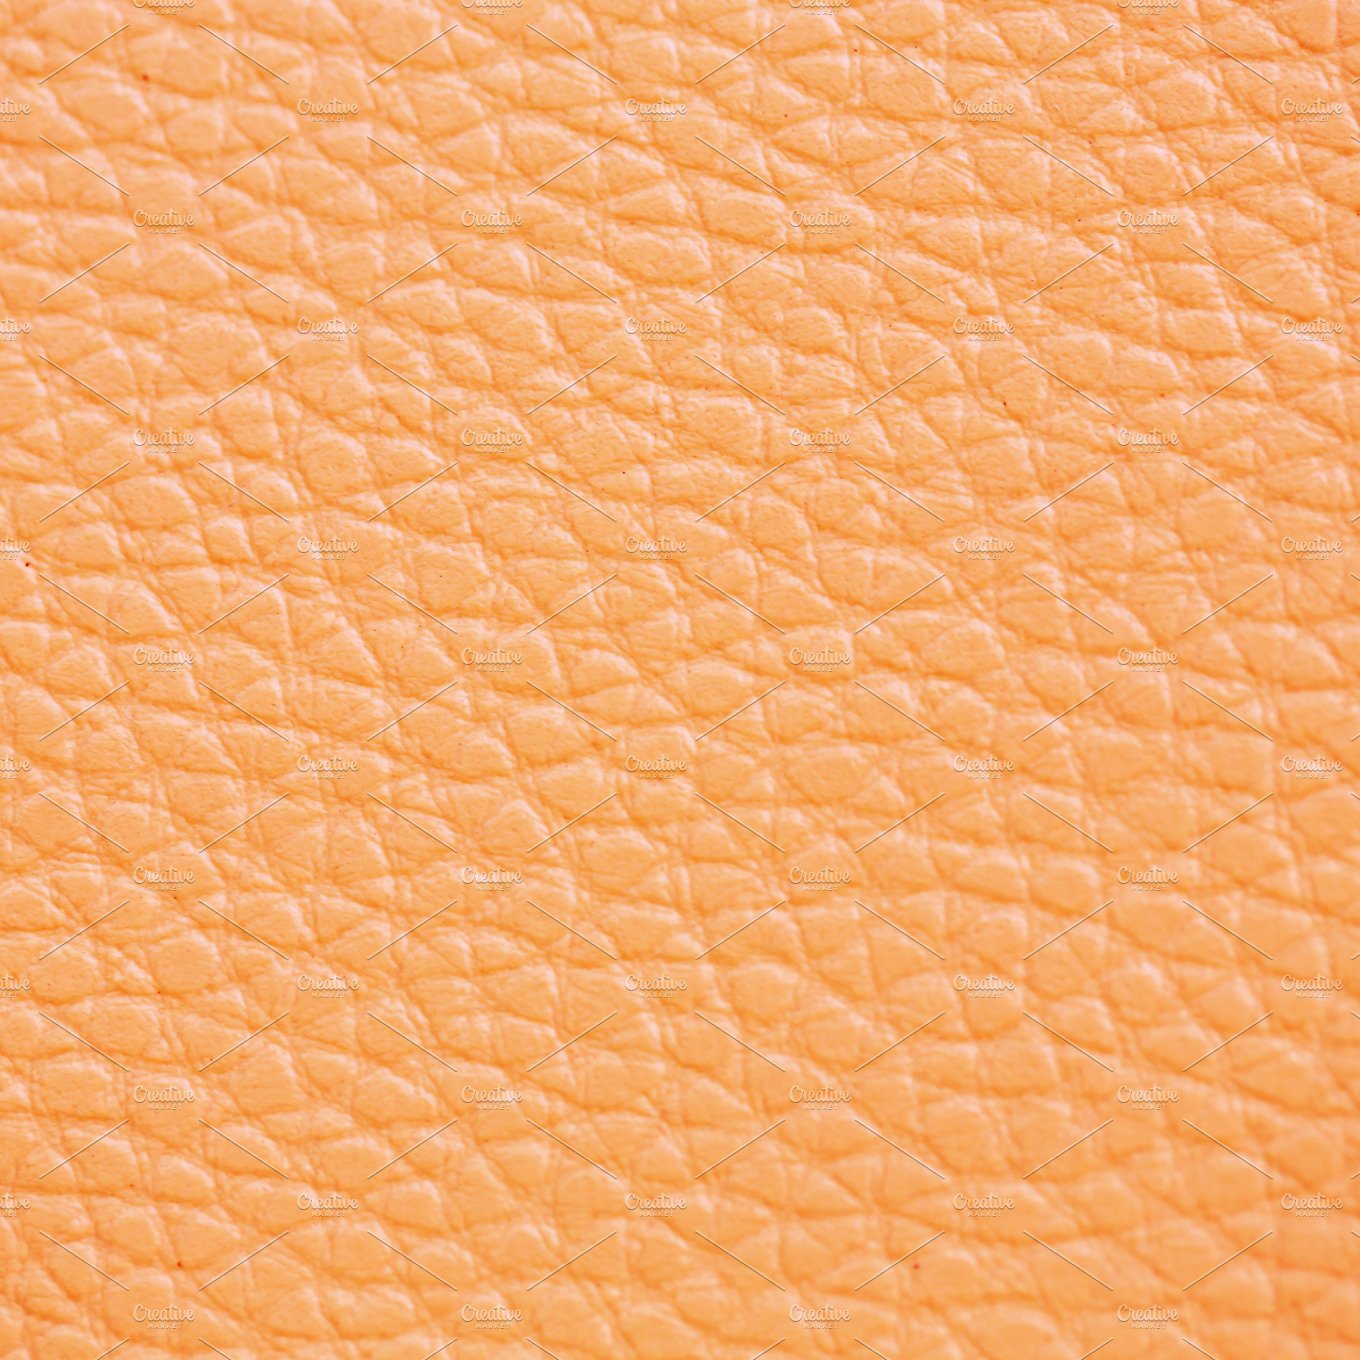 Light orange Leather cover image.